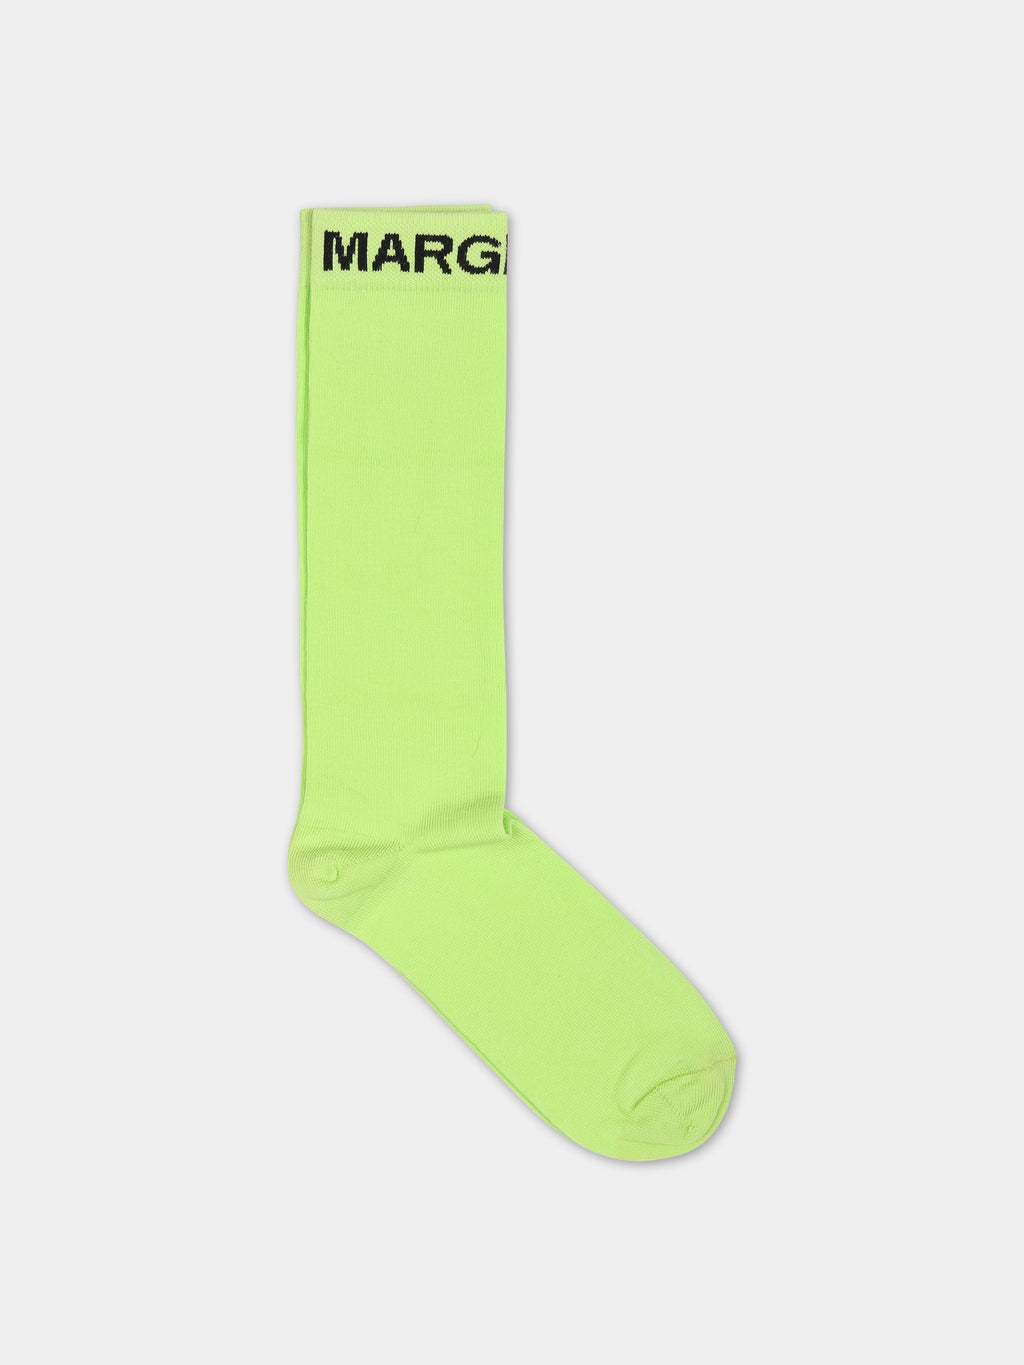 Green socks for kids with logo